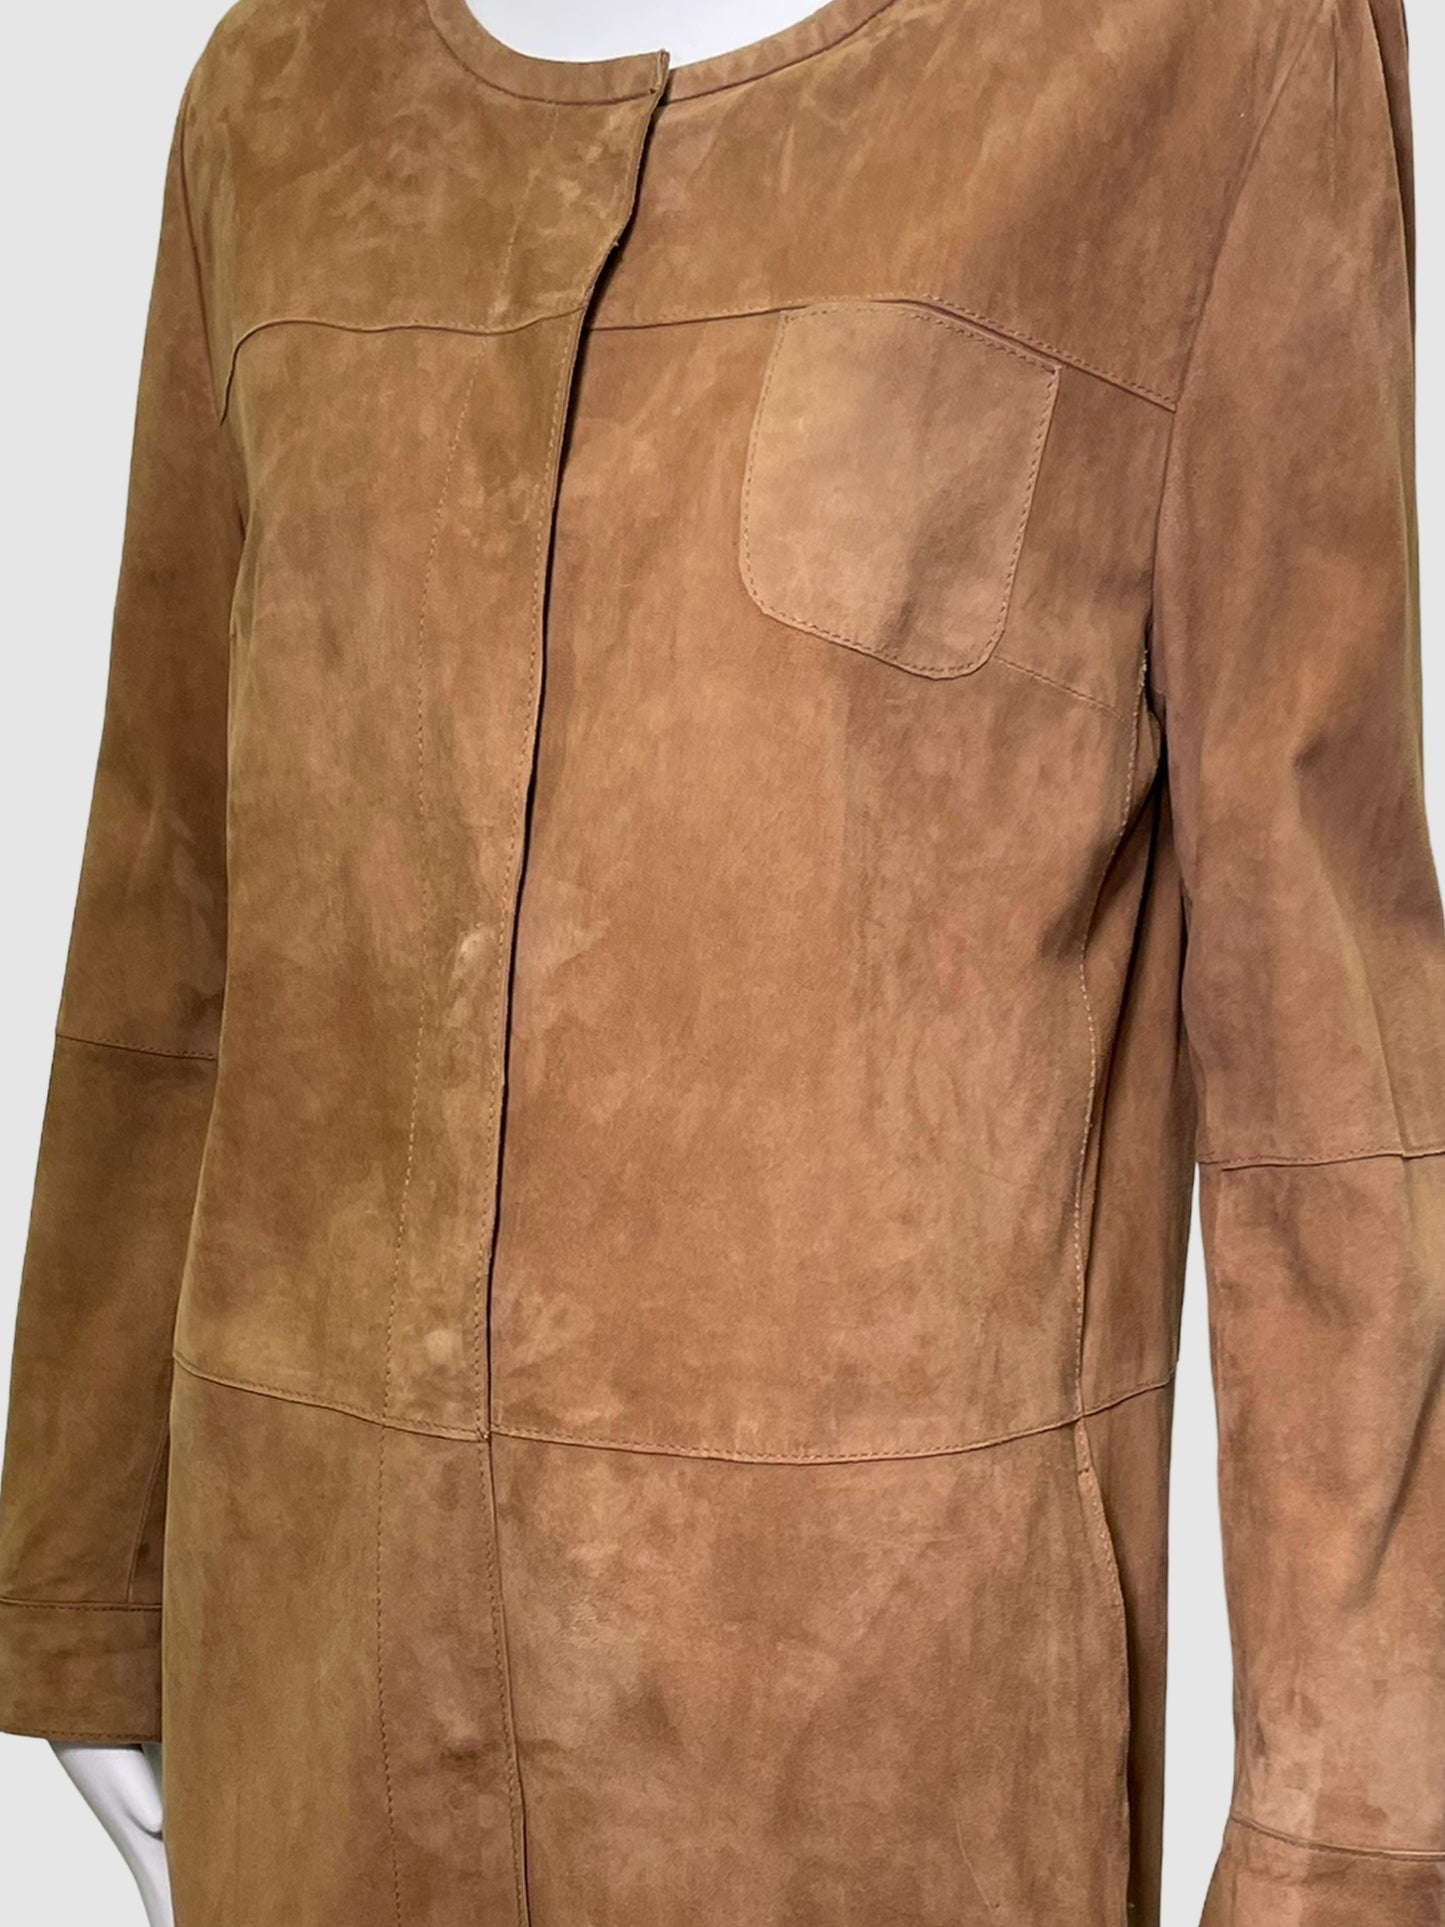 Max Mara Suede Coat - Size 12